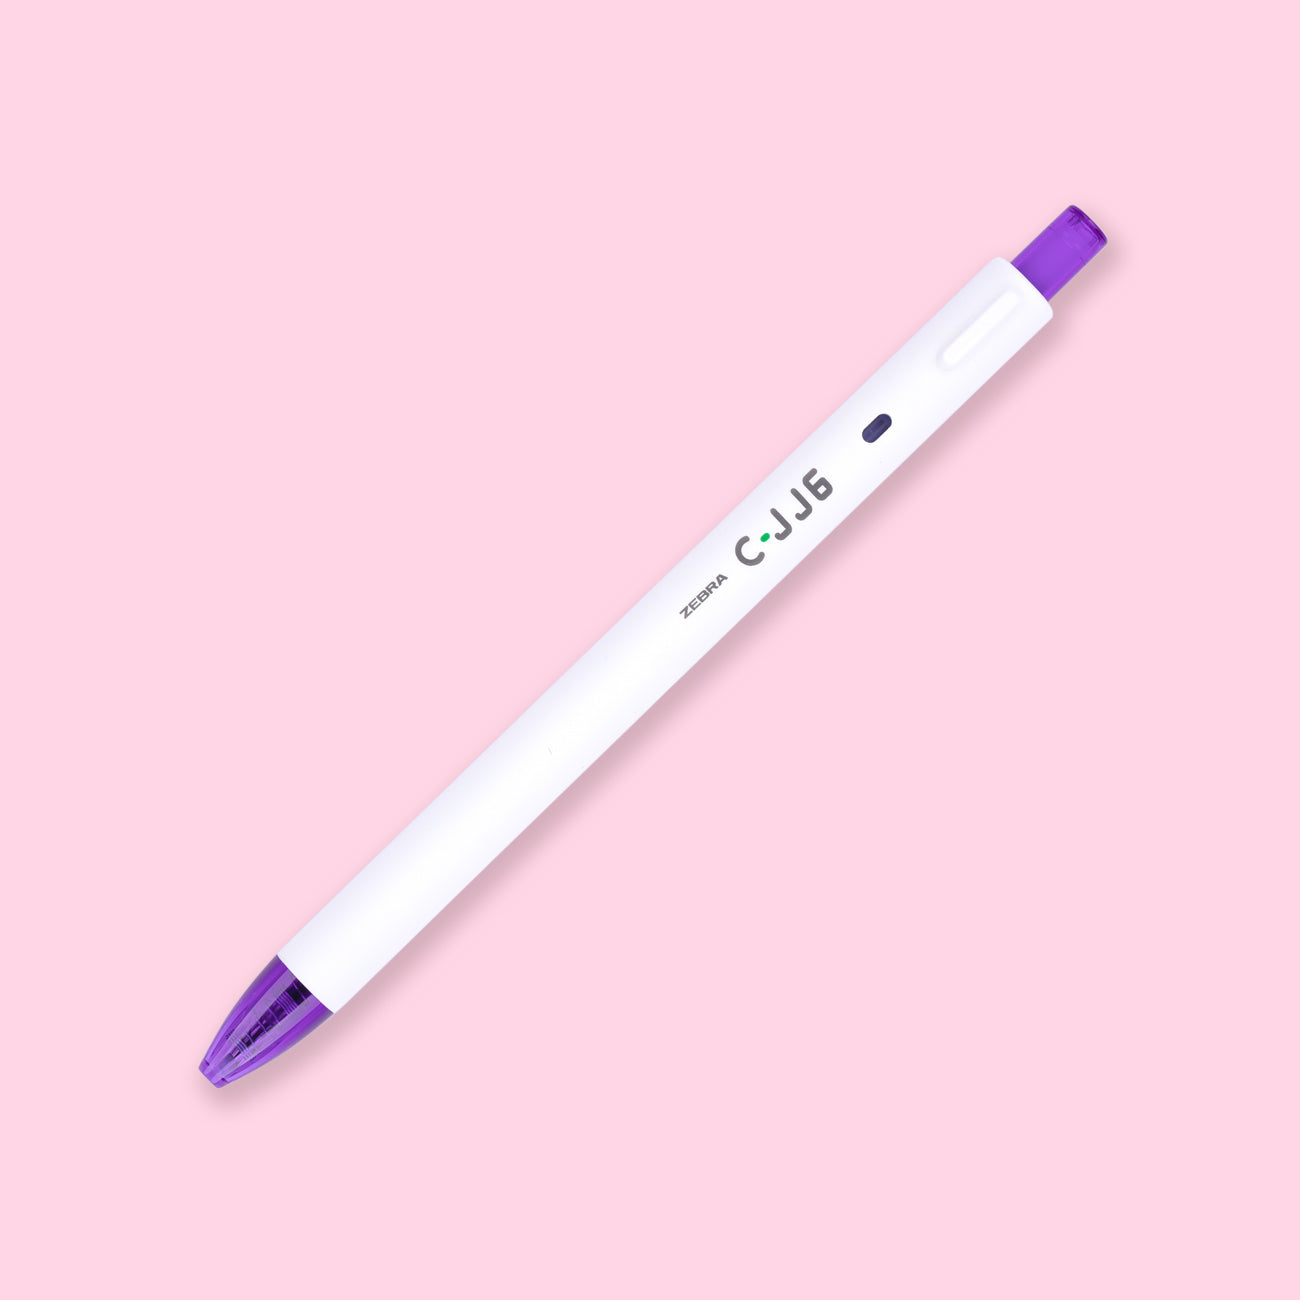 Zebra Rainbow Retractable Gel Pen 0.5mm - 8 color Set